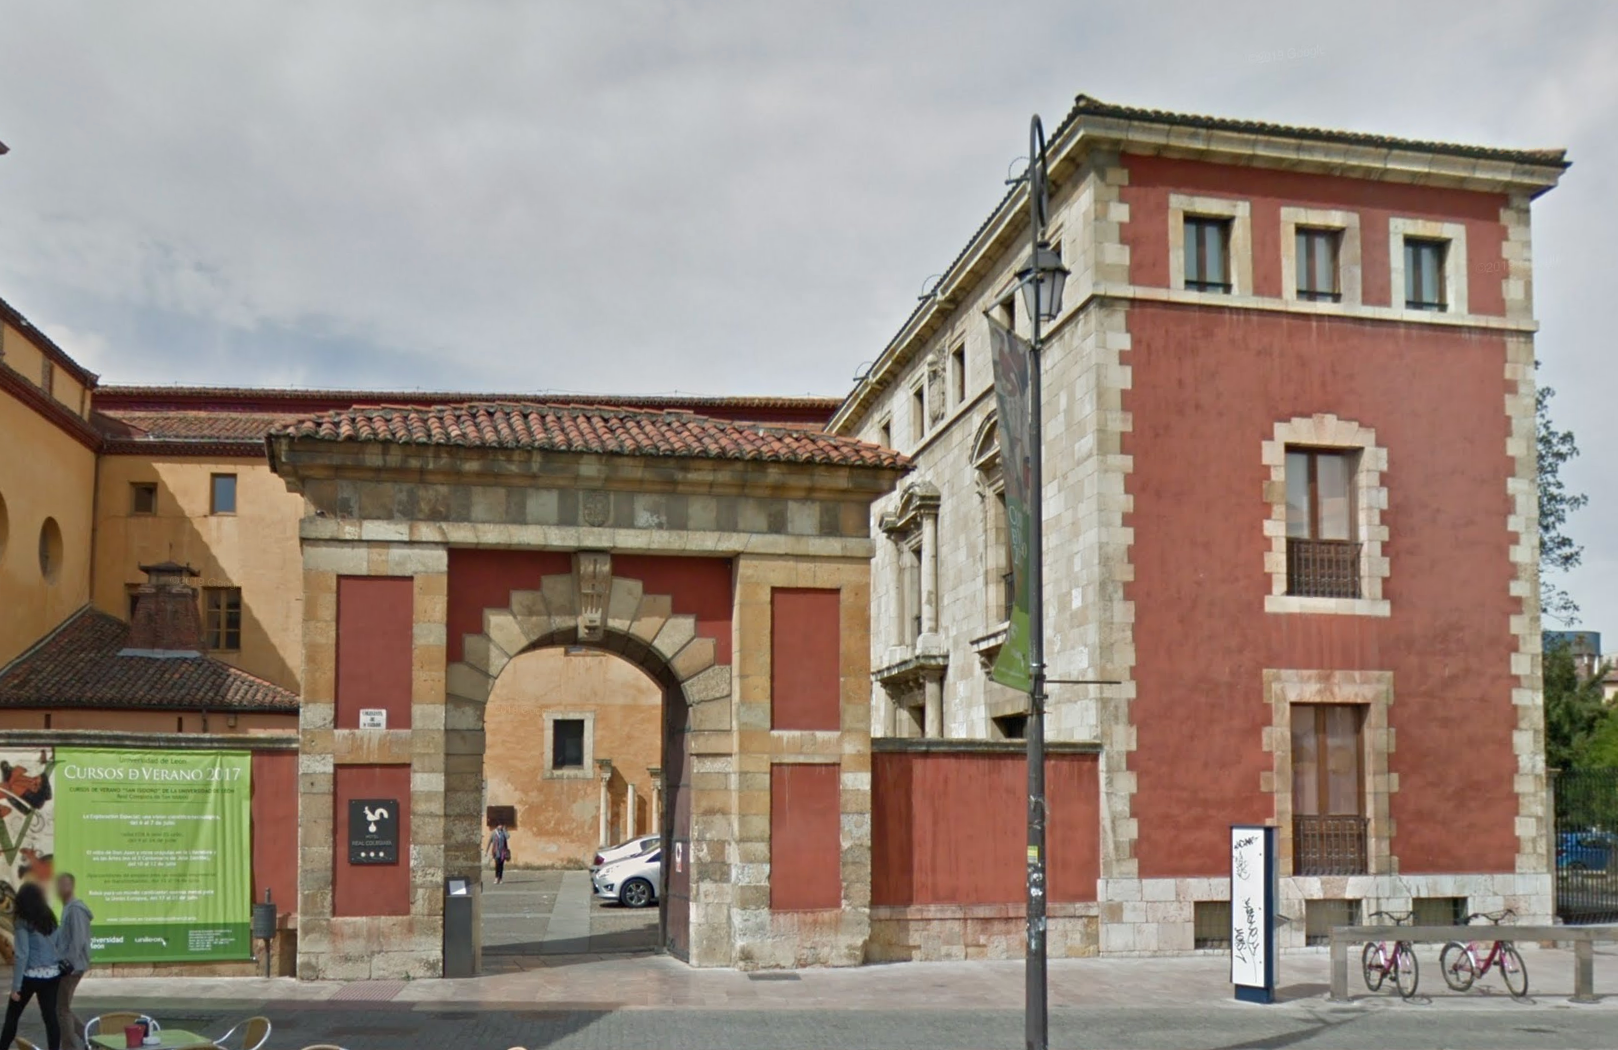 Hotel Real Colegiata San Isidoro by Google Earth